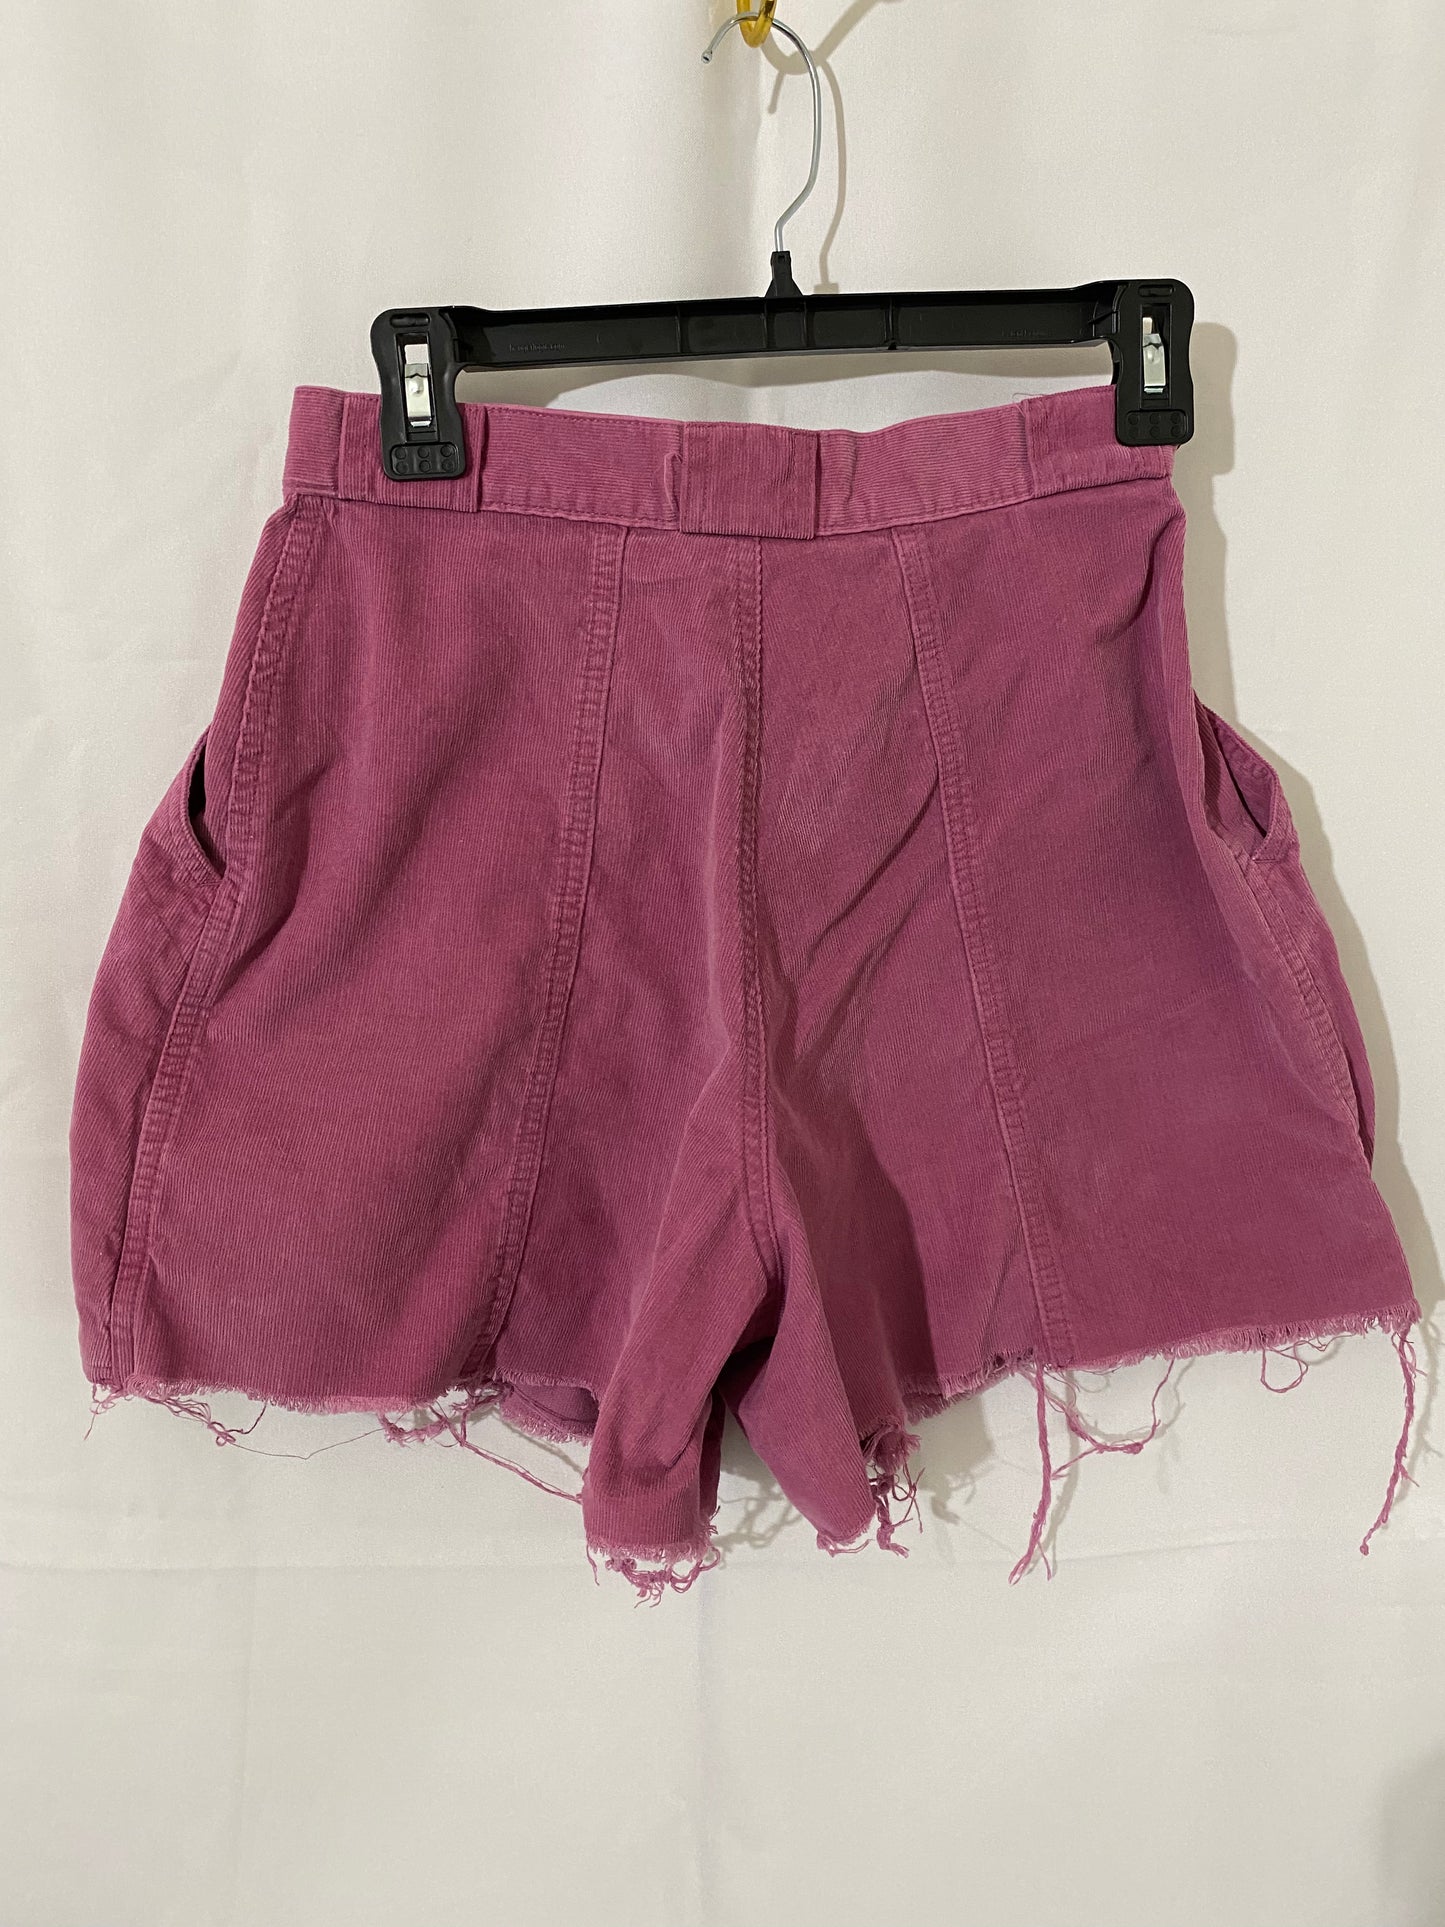 Christian Dior purple shorts